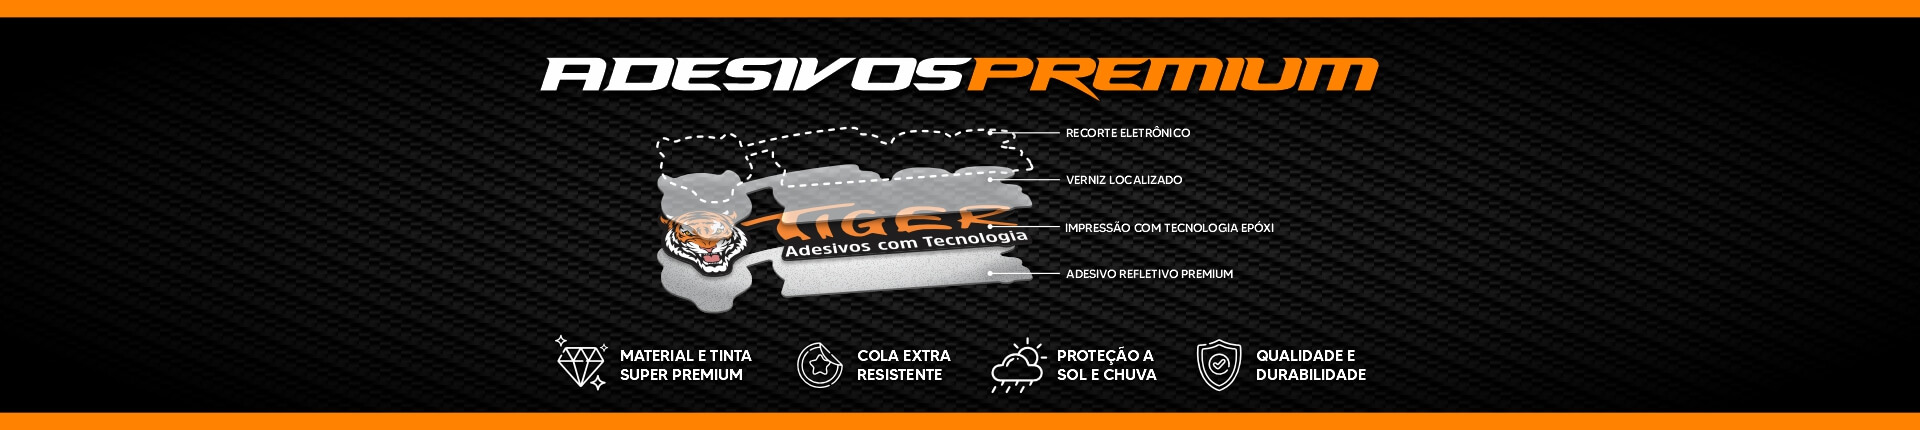 Full Banner Site - Tiger Adesivos com Tecnologia - Adesivos Premium